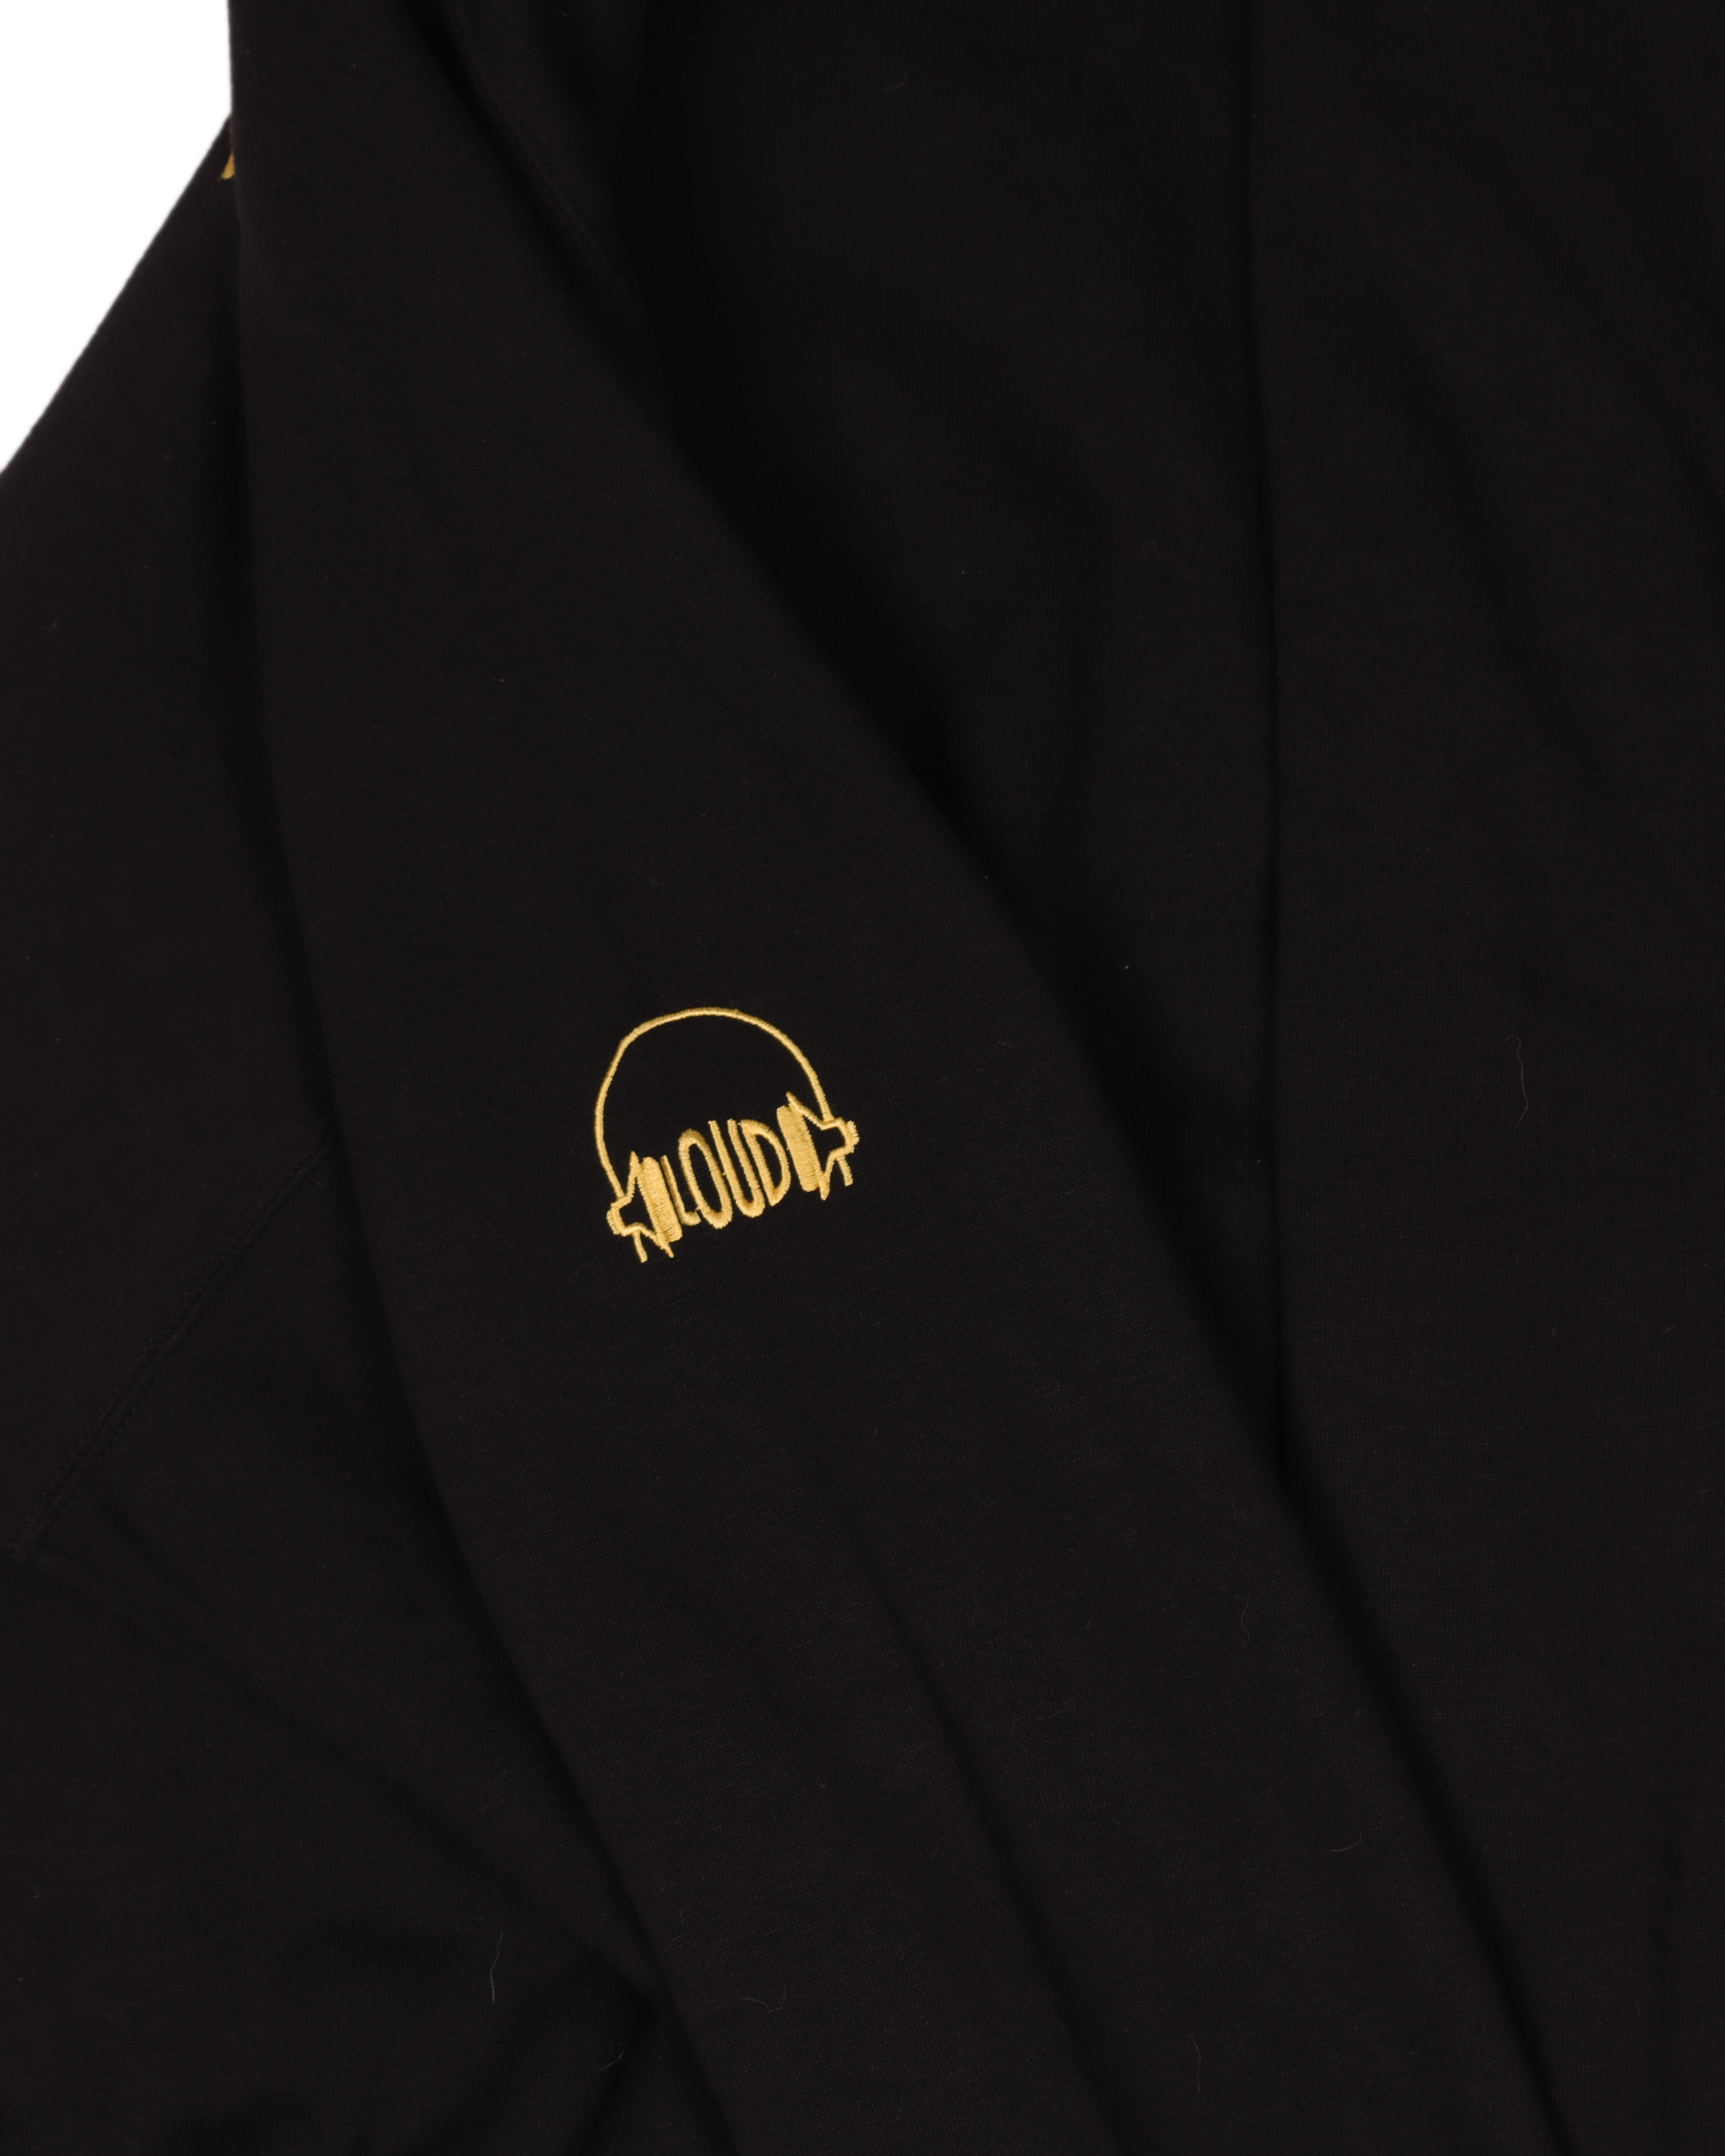 Wu-Tang Clan Logo Wu-Wear Loud Records Hooded Sweatshirt